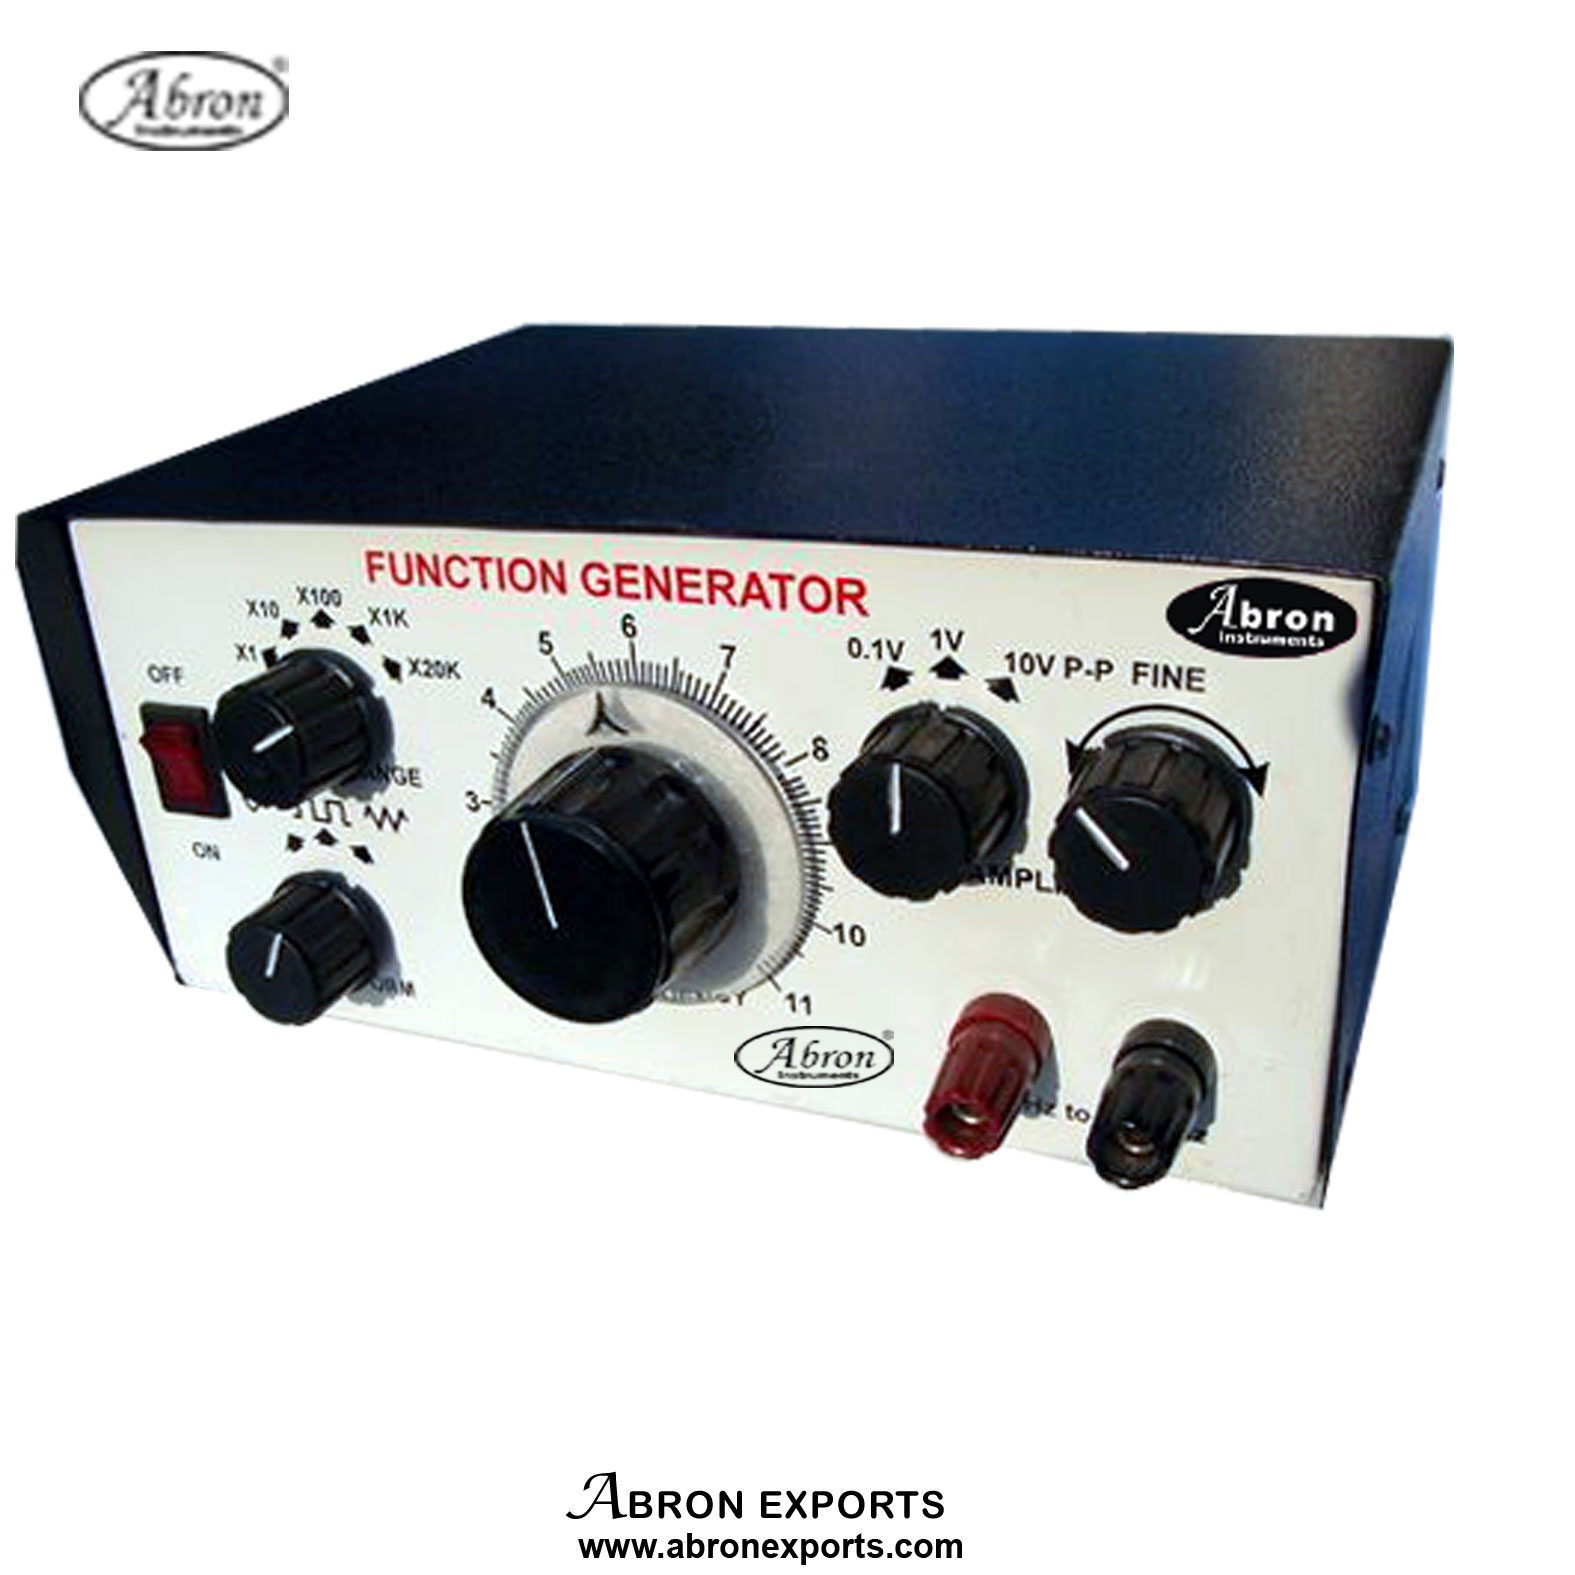 Function Generator Abron 1Hz-1MHz Sine,Square,Triangle wave abron AE-1353